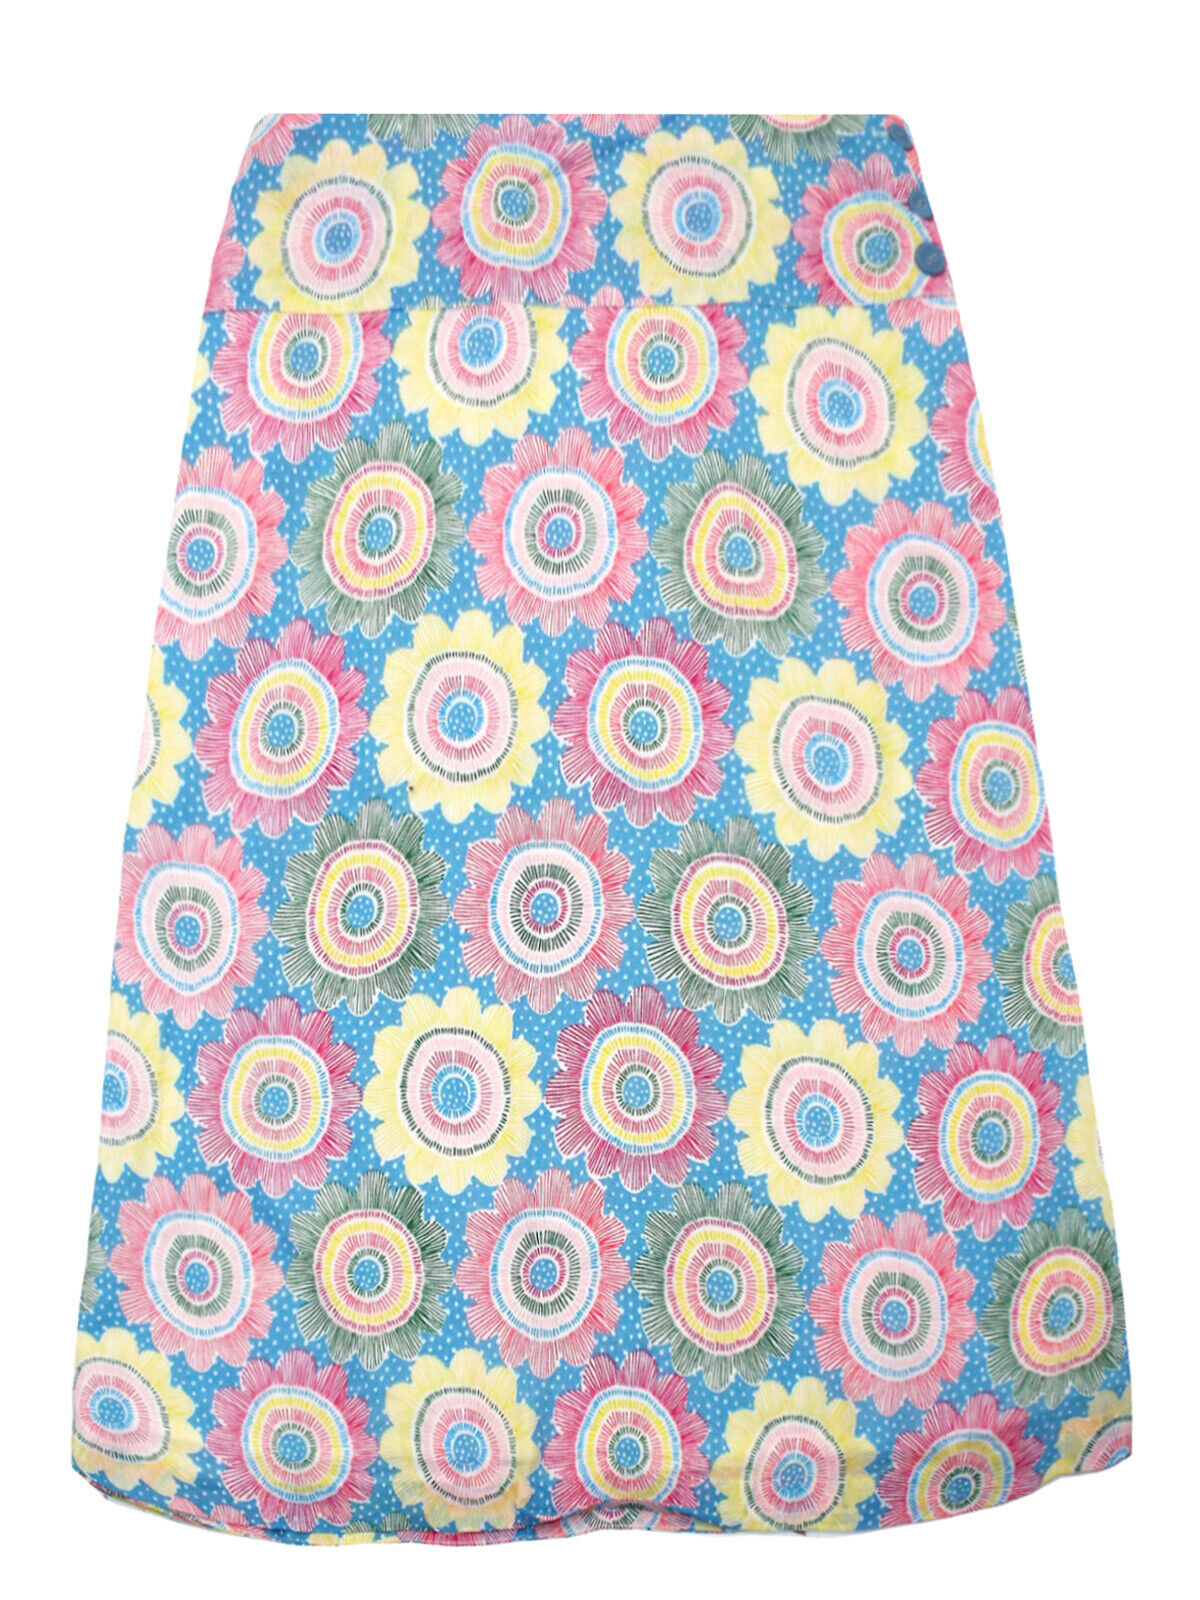 EX Seasalt Etched Flower Skylark Skirt in Size 10 RRP £55